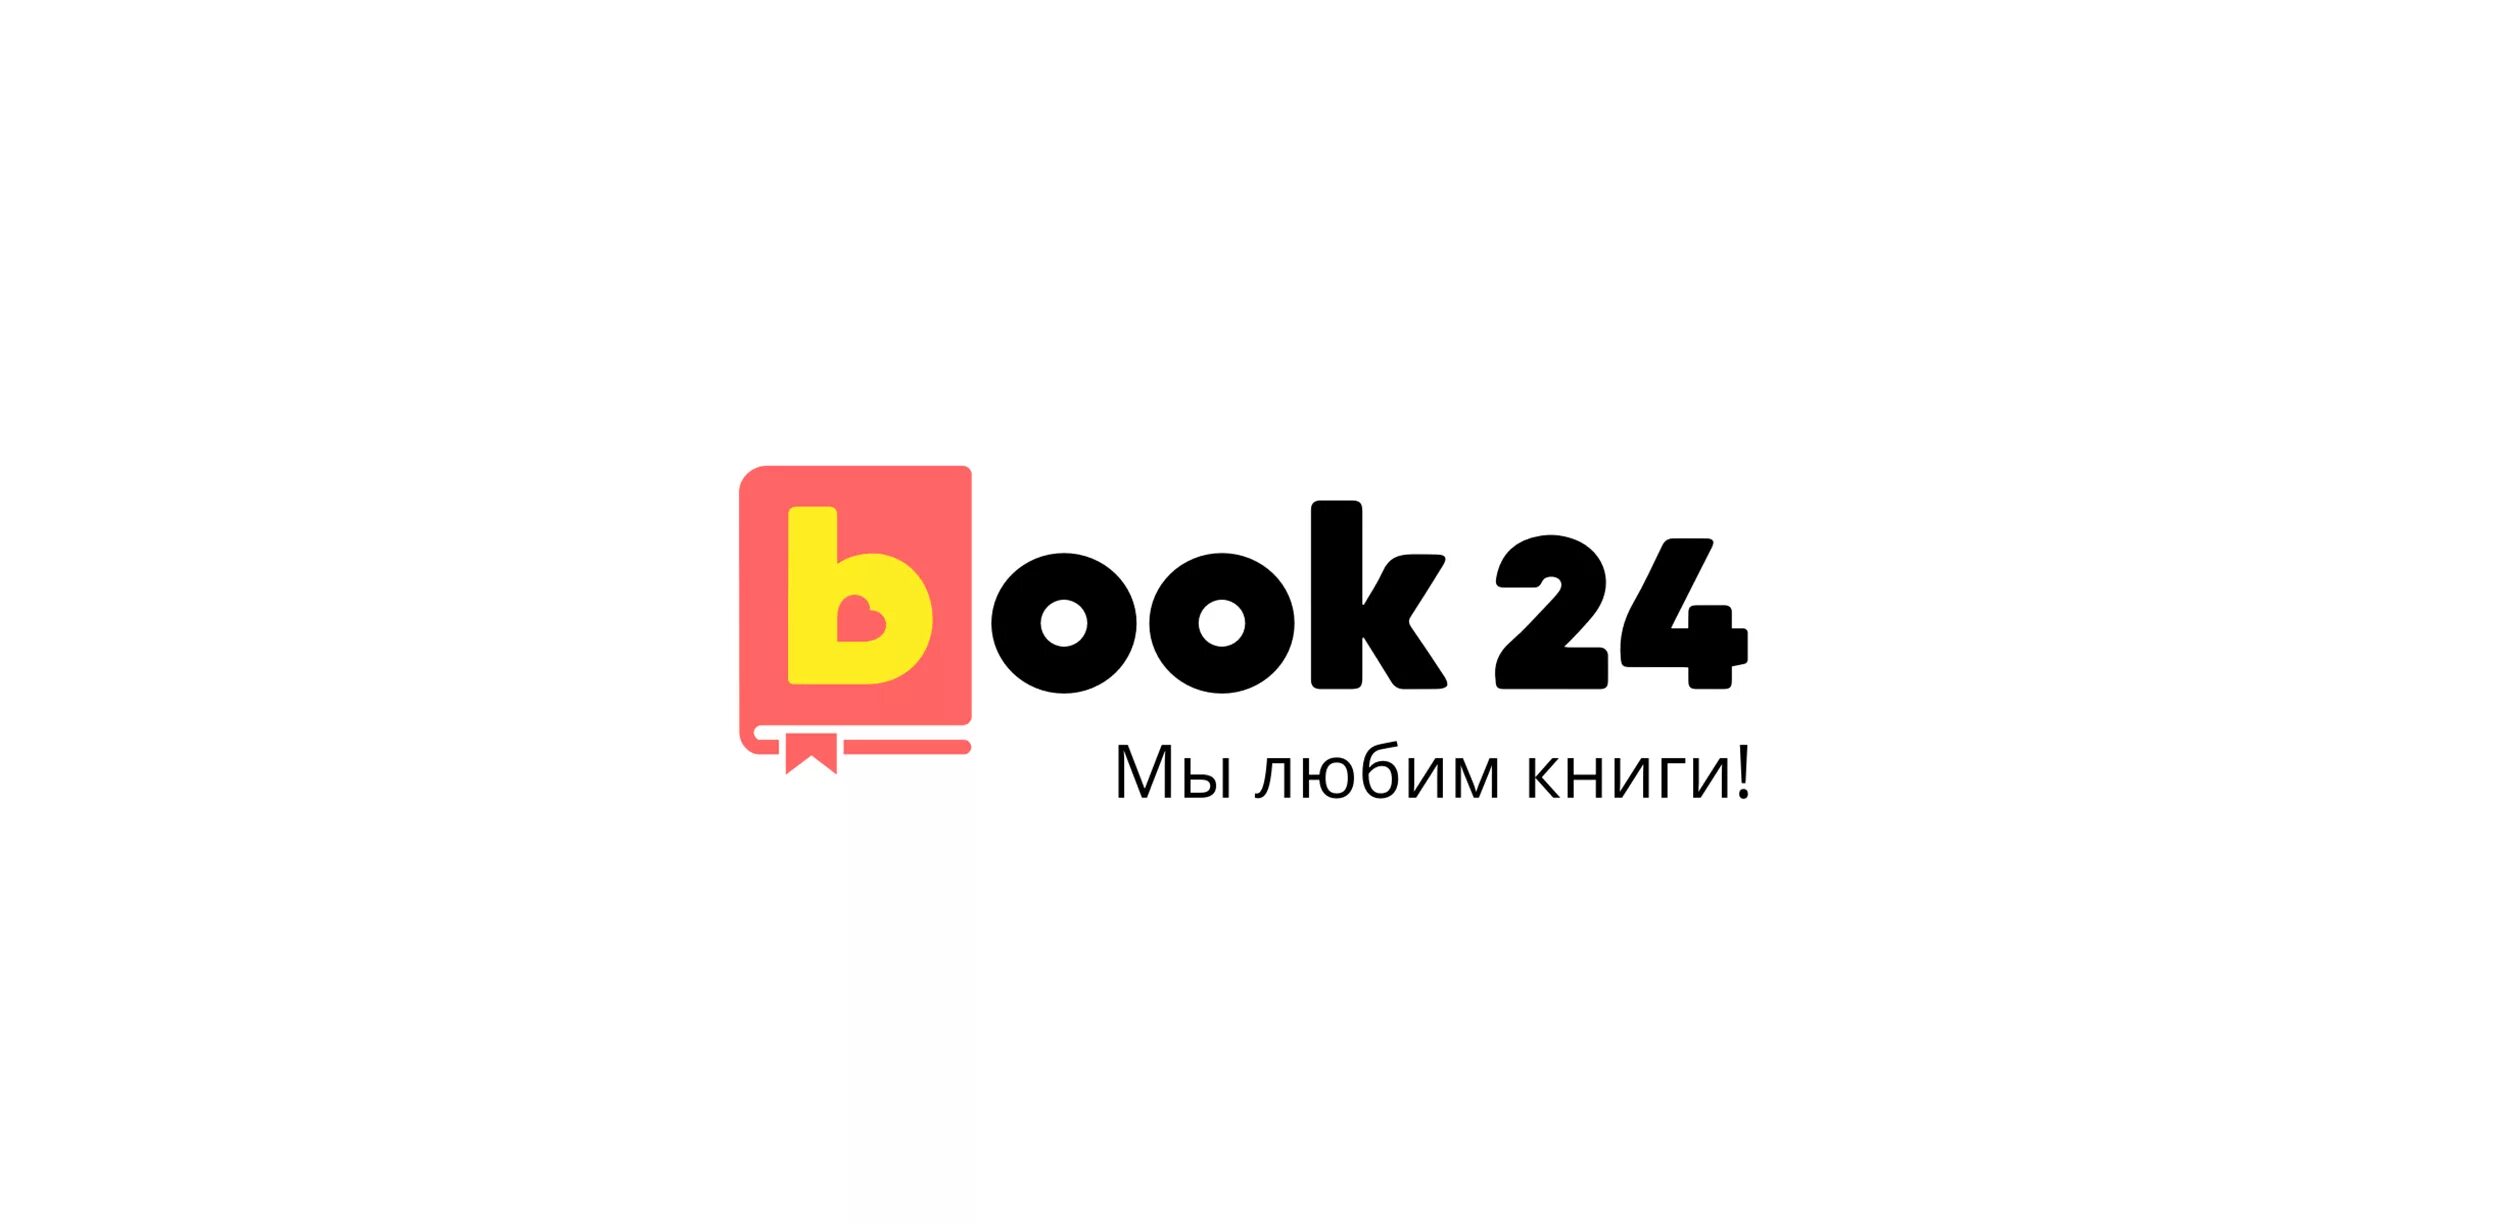 Book24 интернет-магазин книги. Бук24 книжный интернет магазин. Бук 24. Логотип интернет магазина книг. Бук книжный интернет магазин